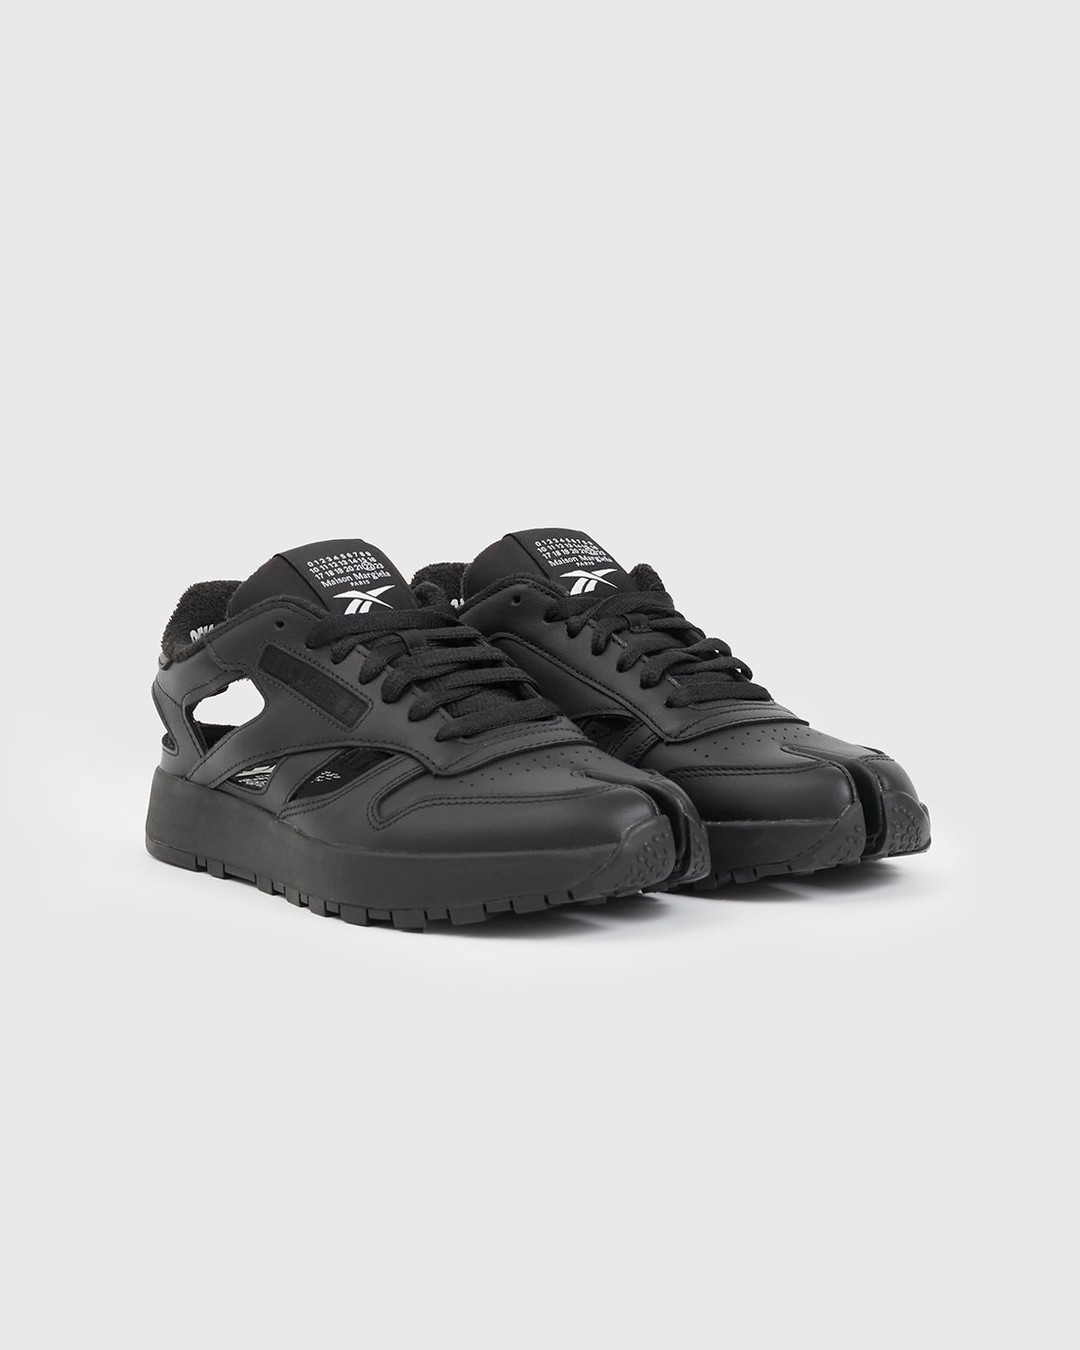 Maison Margiela x Reebok – Classic Leather Tabi Low Black - Sneakers - Black - Image 2